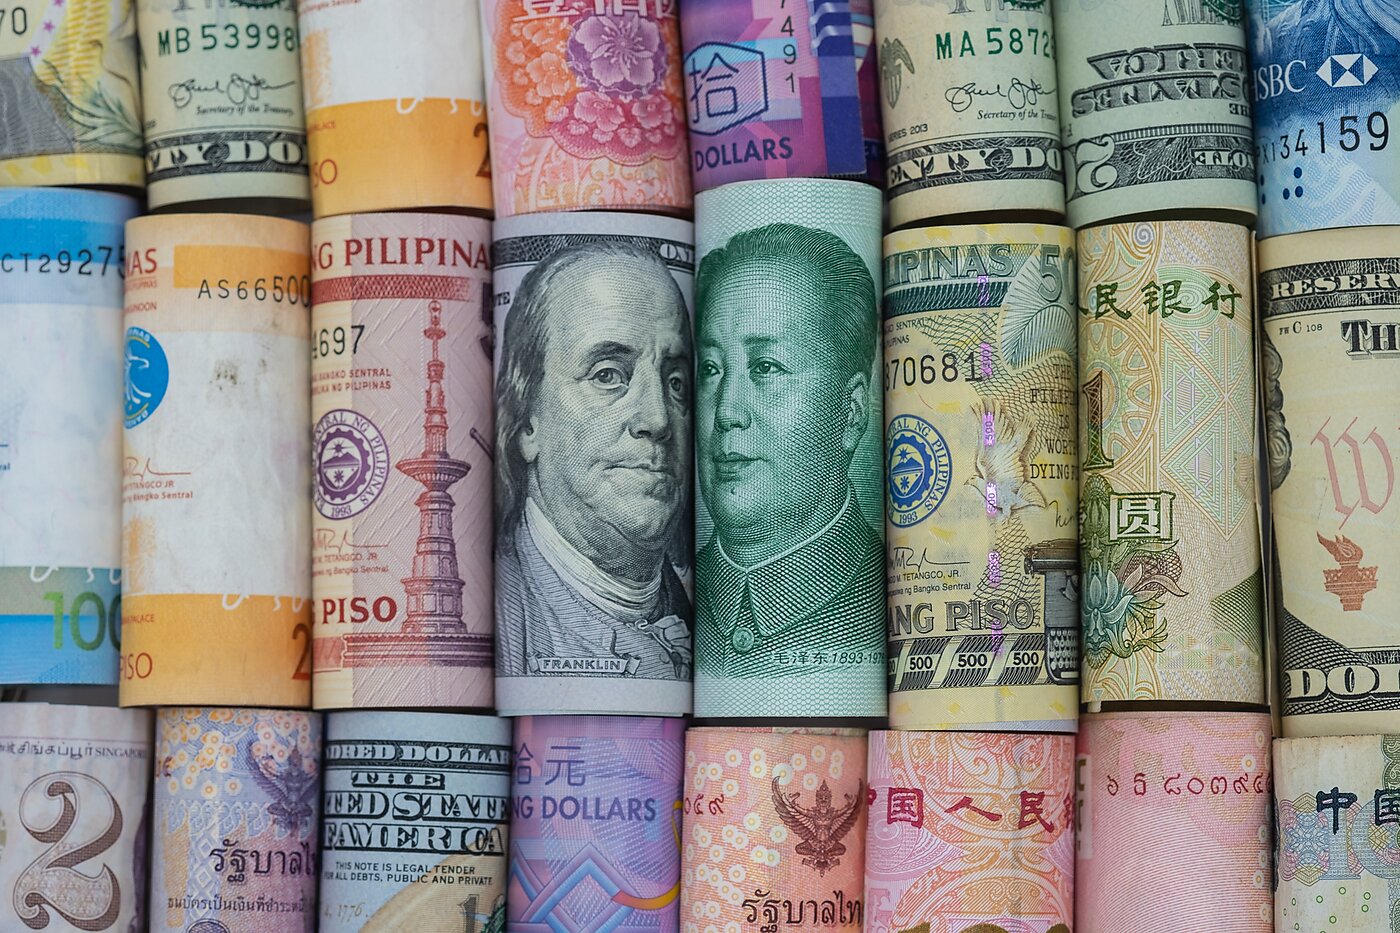 Cash from around the world